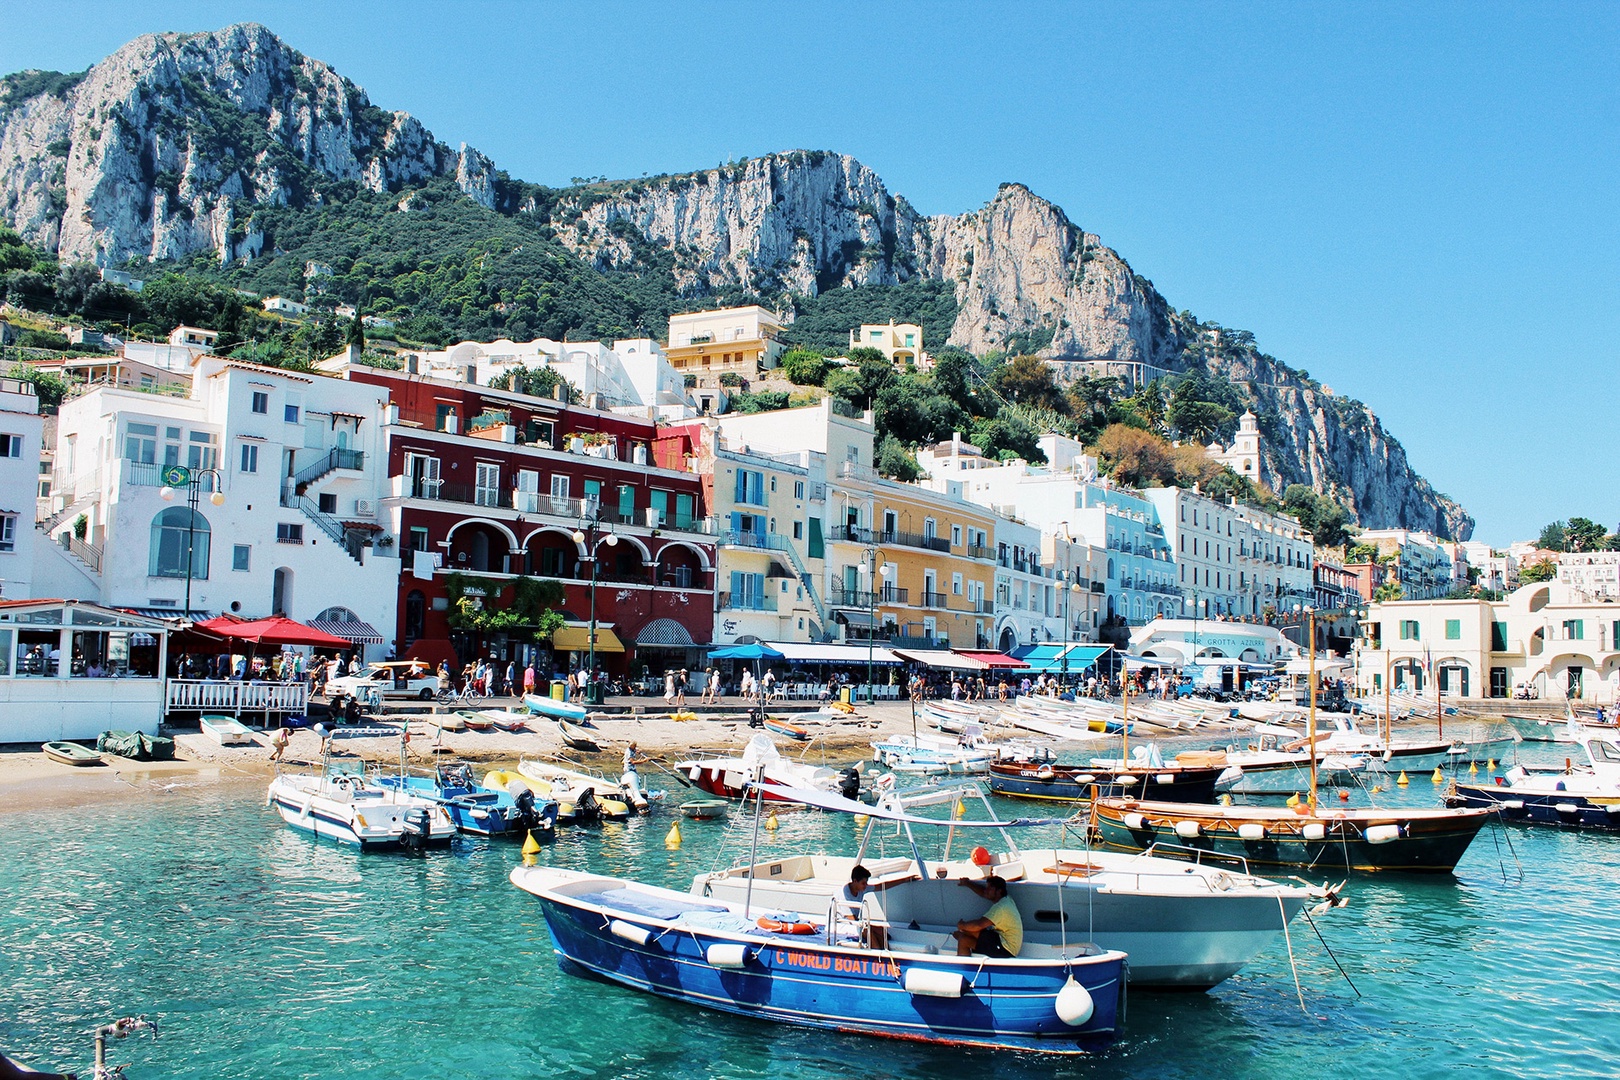 Take a ferry to visit Capri nearby.